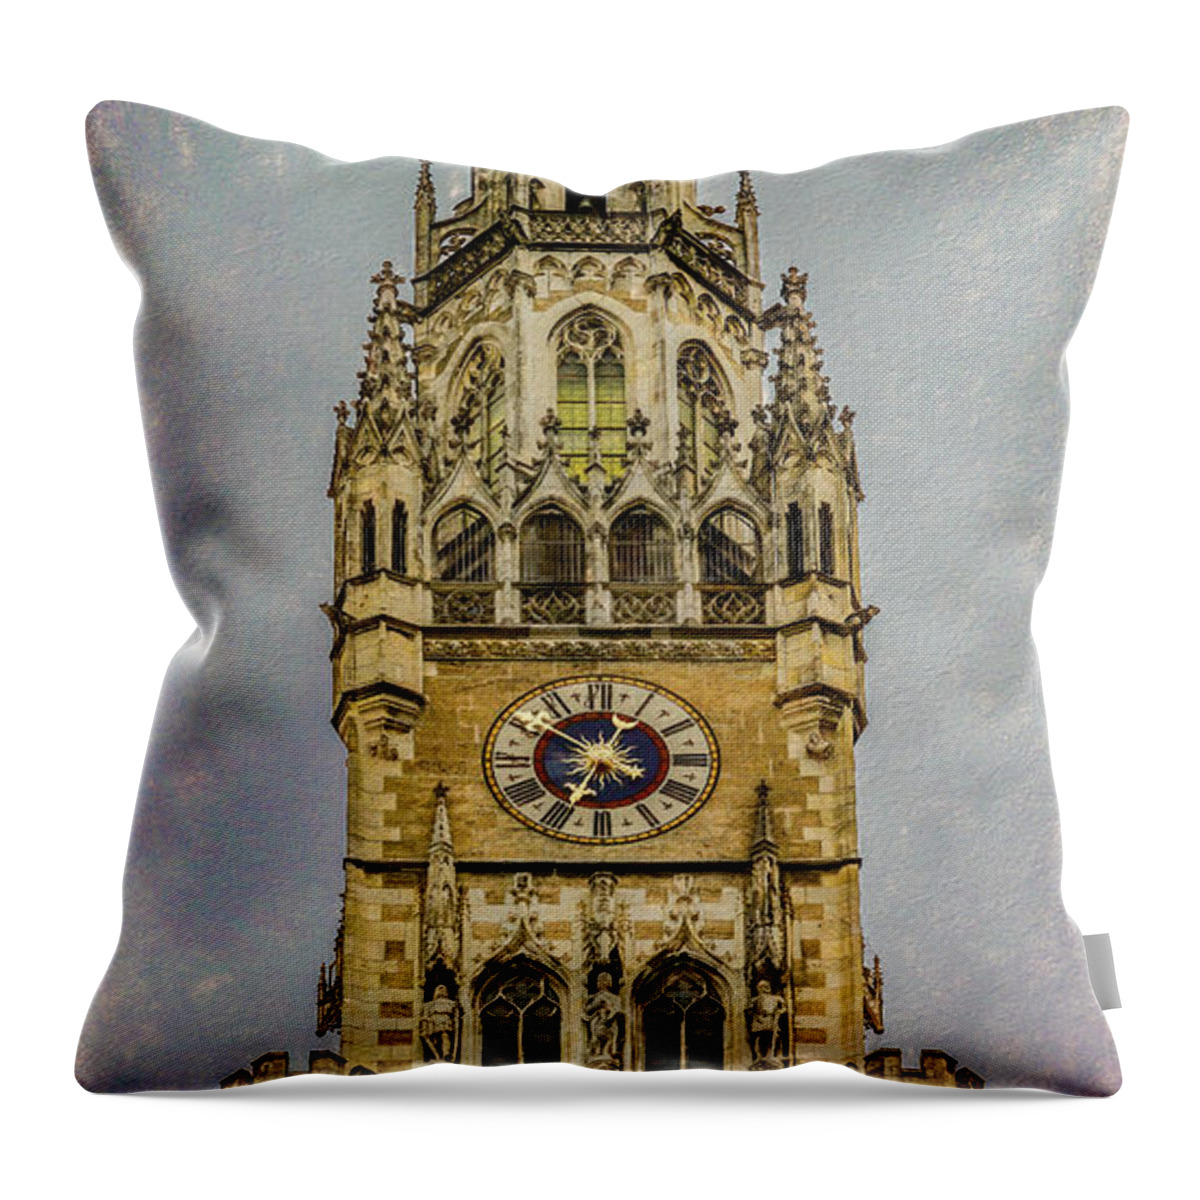 Munich Throw Pillow featuring the photograph Glockenspiel Clock Tower by Marcy Wielfaert